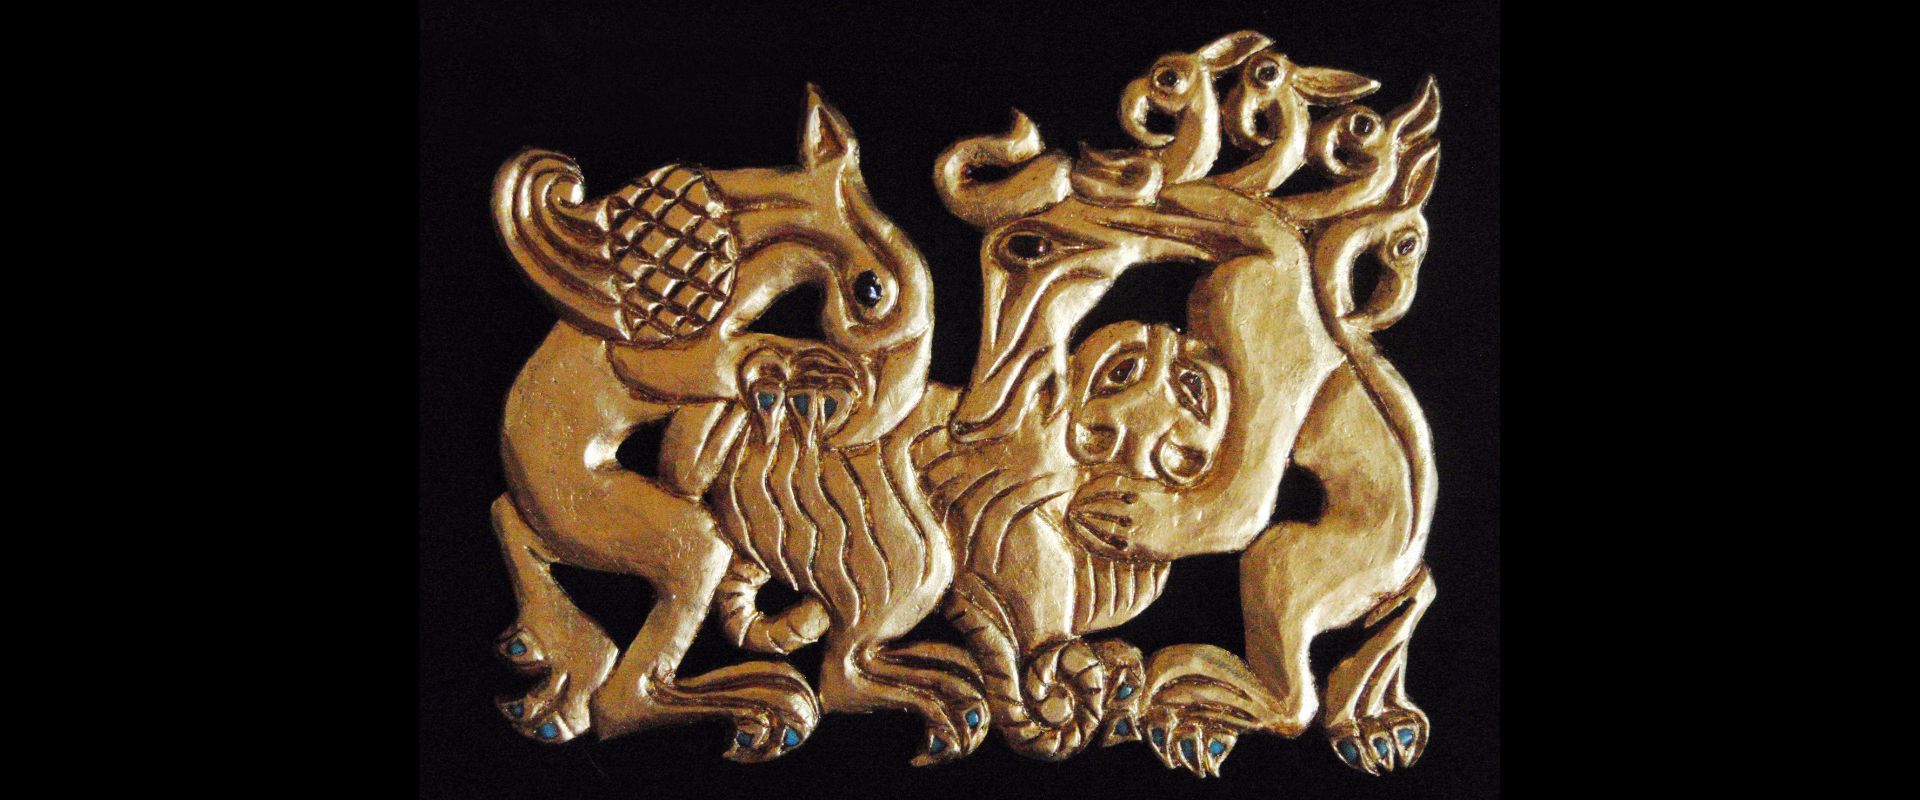 Scythian gold artifacts on black background